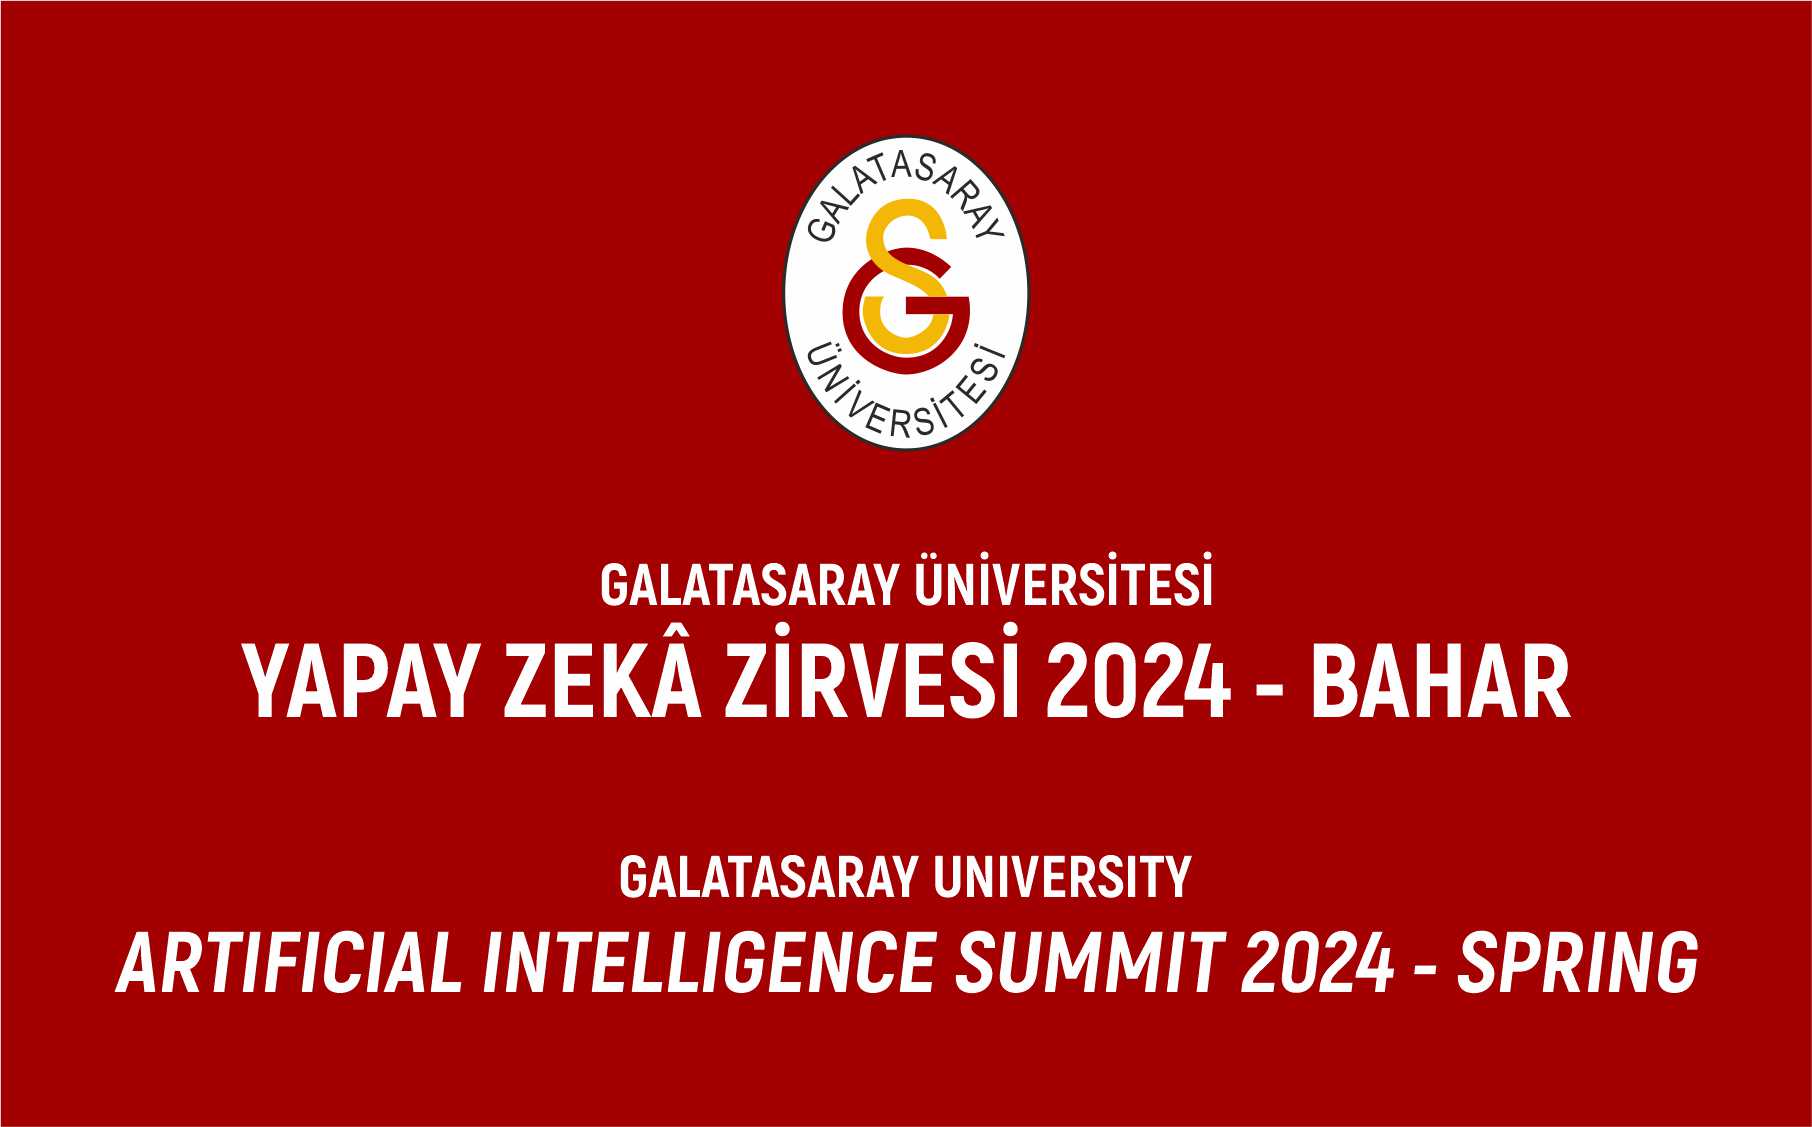 Yapay Zekâ Zirvesi 2024 - Bahar (Artificial Intelligence Summit - 2024 Spring) duyuru görseli